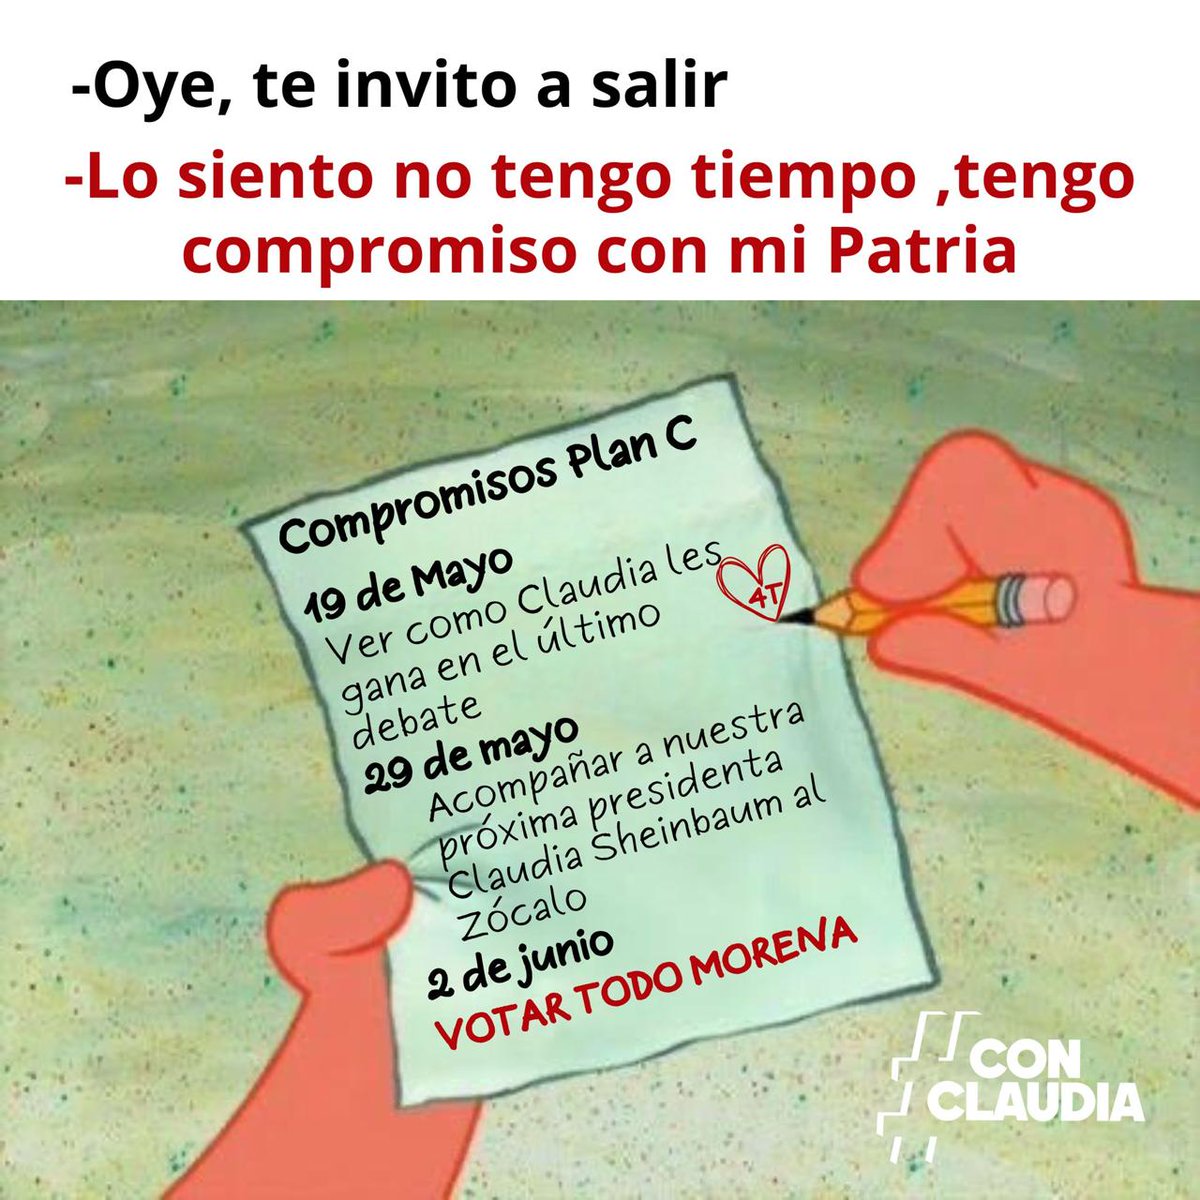 #VotaTodoMorena #ConTokioClaudia #SeguridadConClaudia 🙌